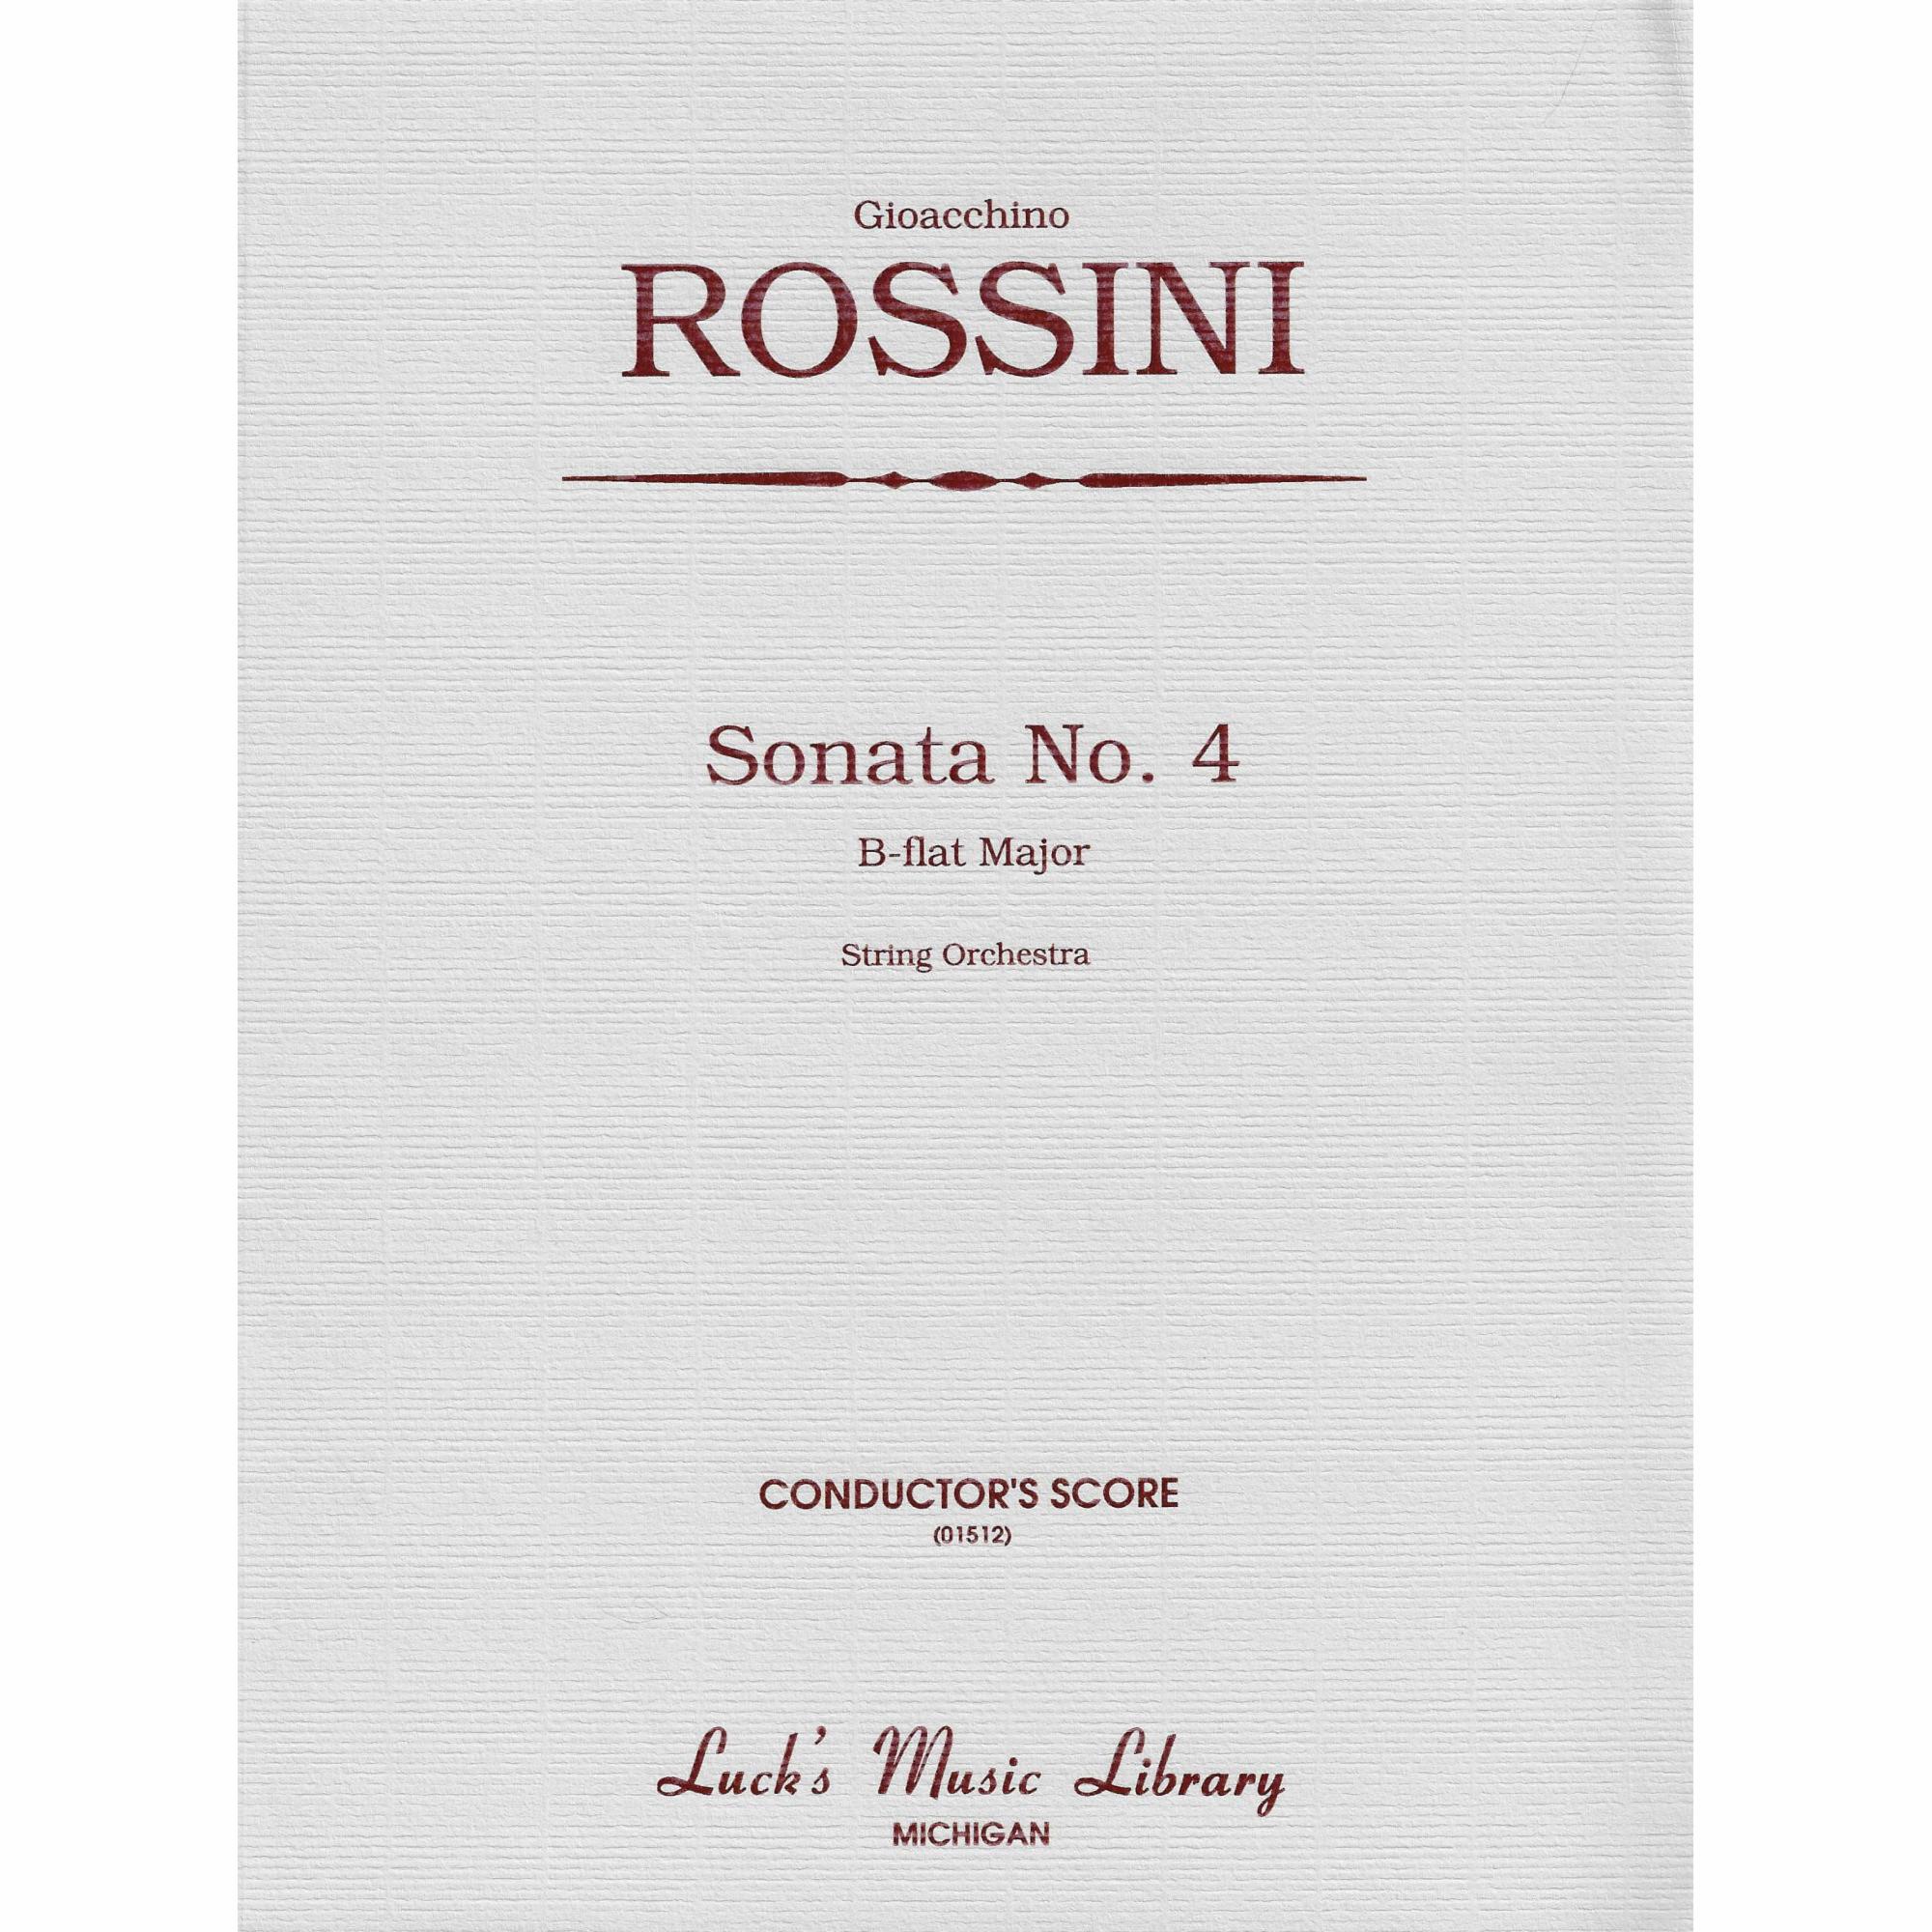 Rossini -- Sonata No. 4 in B-flat Major for String Orchestra